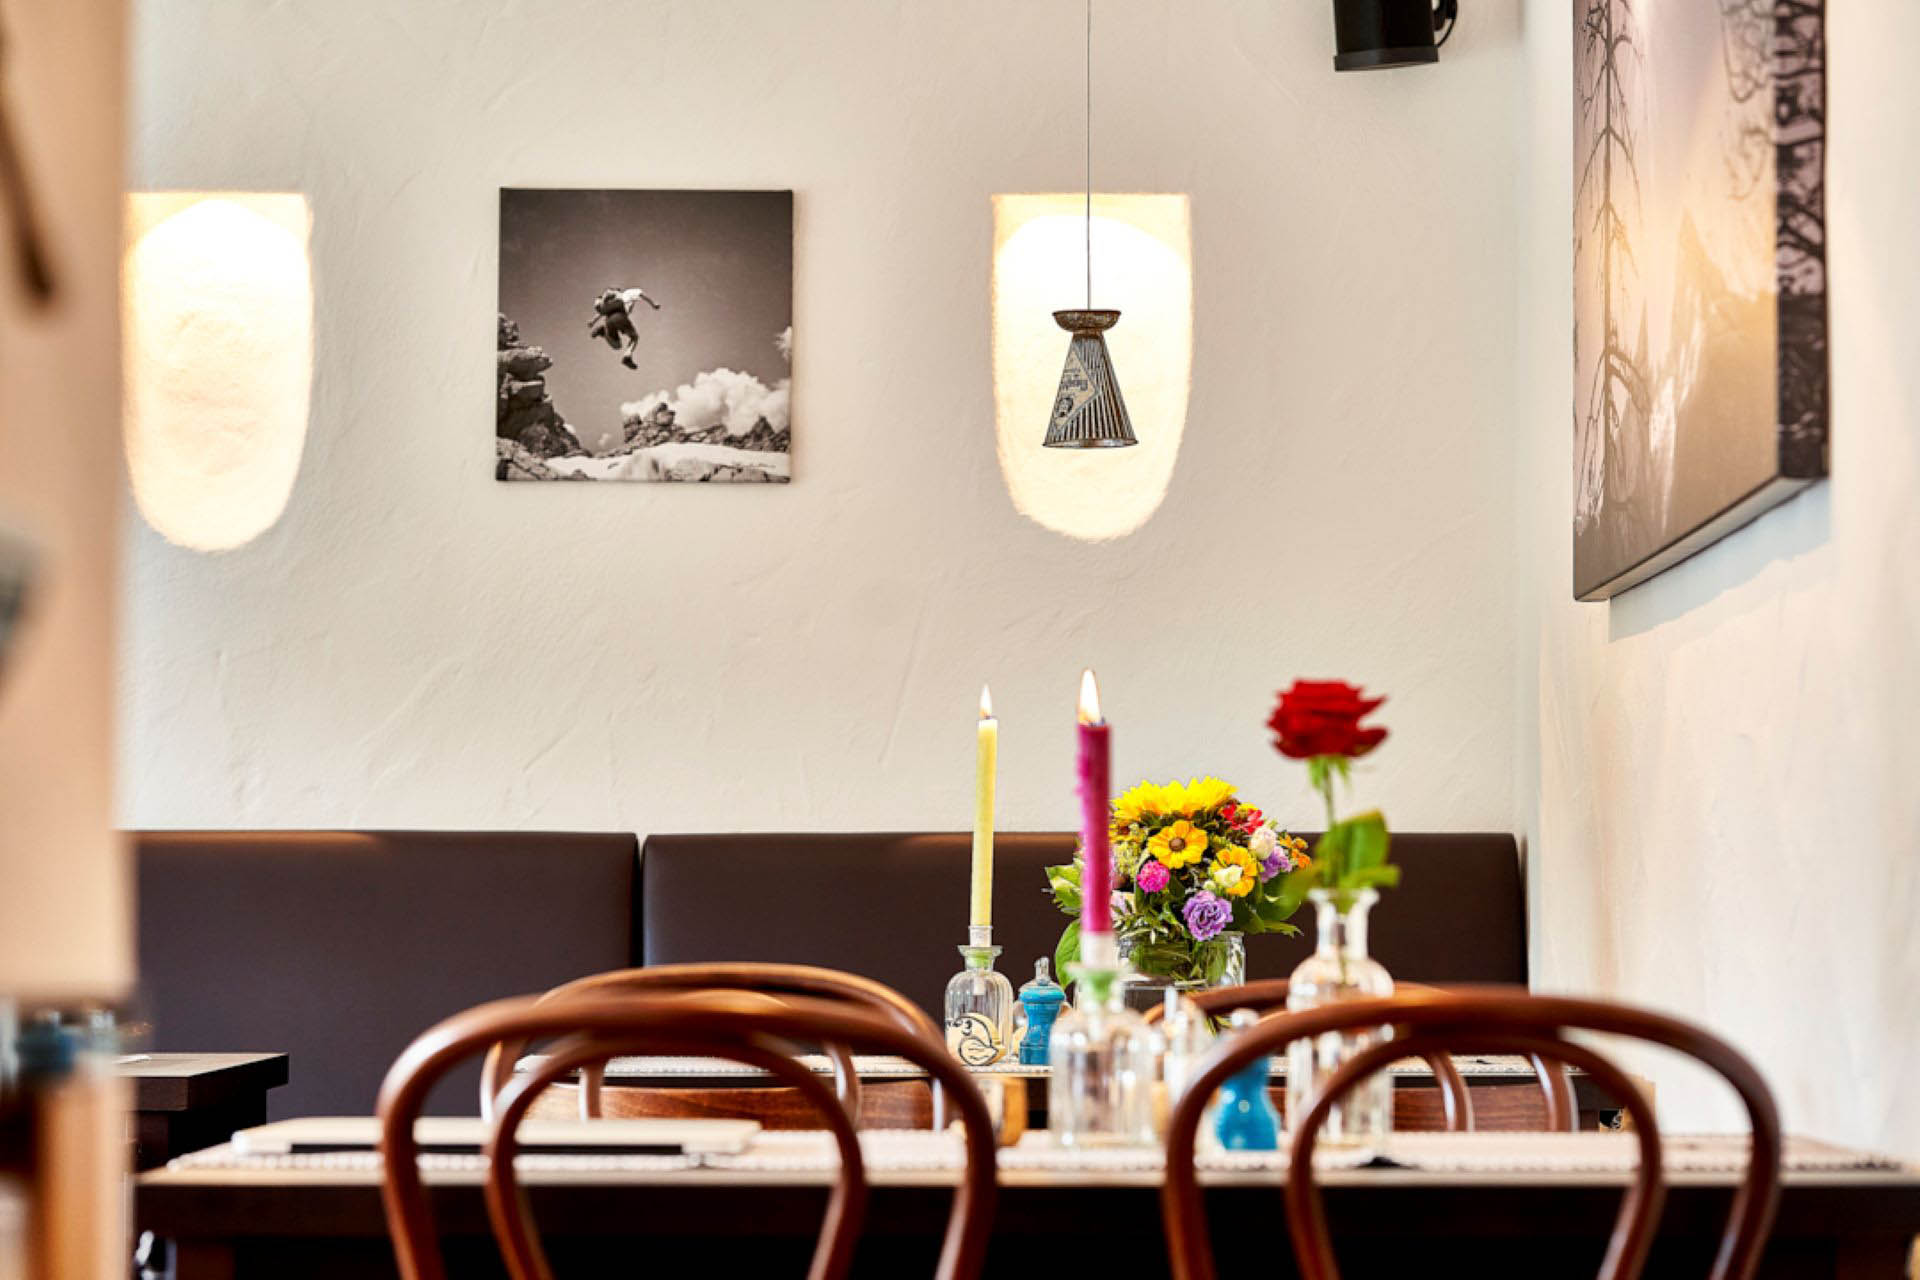 Café Kaffeesatz, Schoenau am Koenigssee, Stilleben im Café